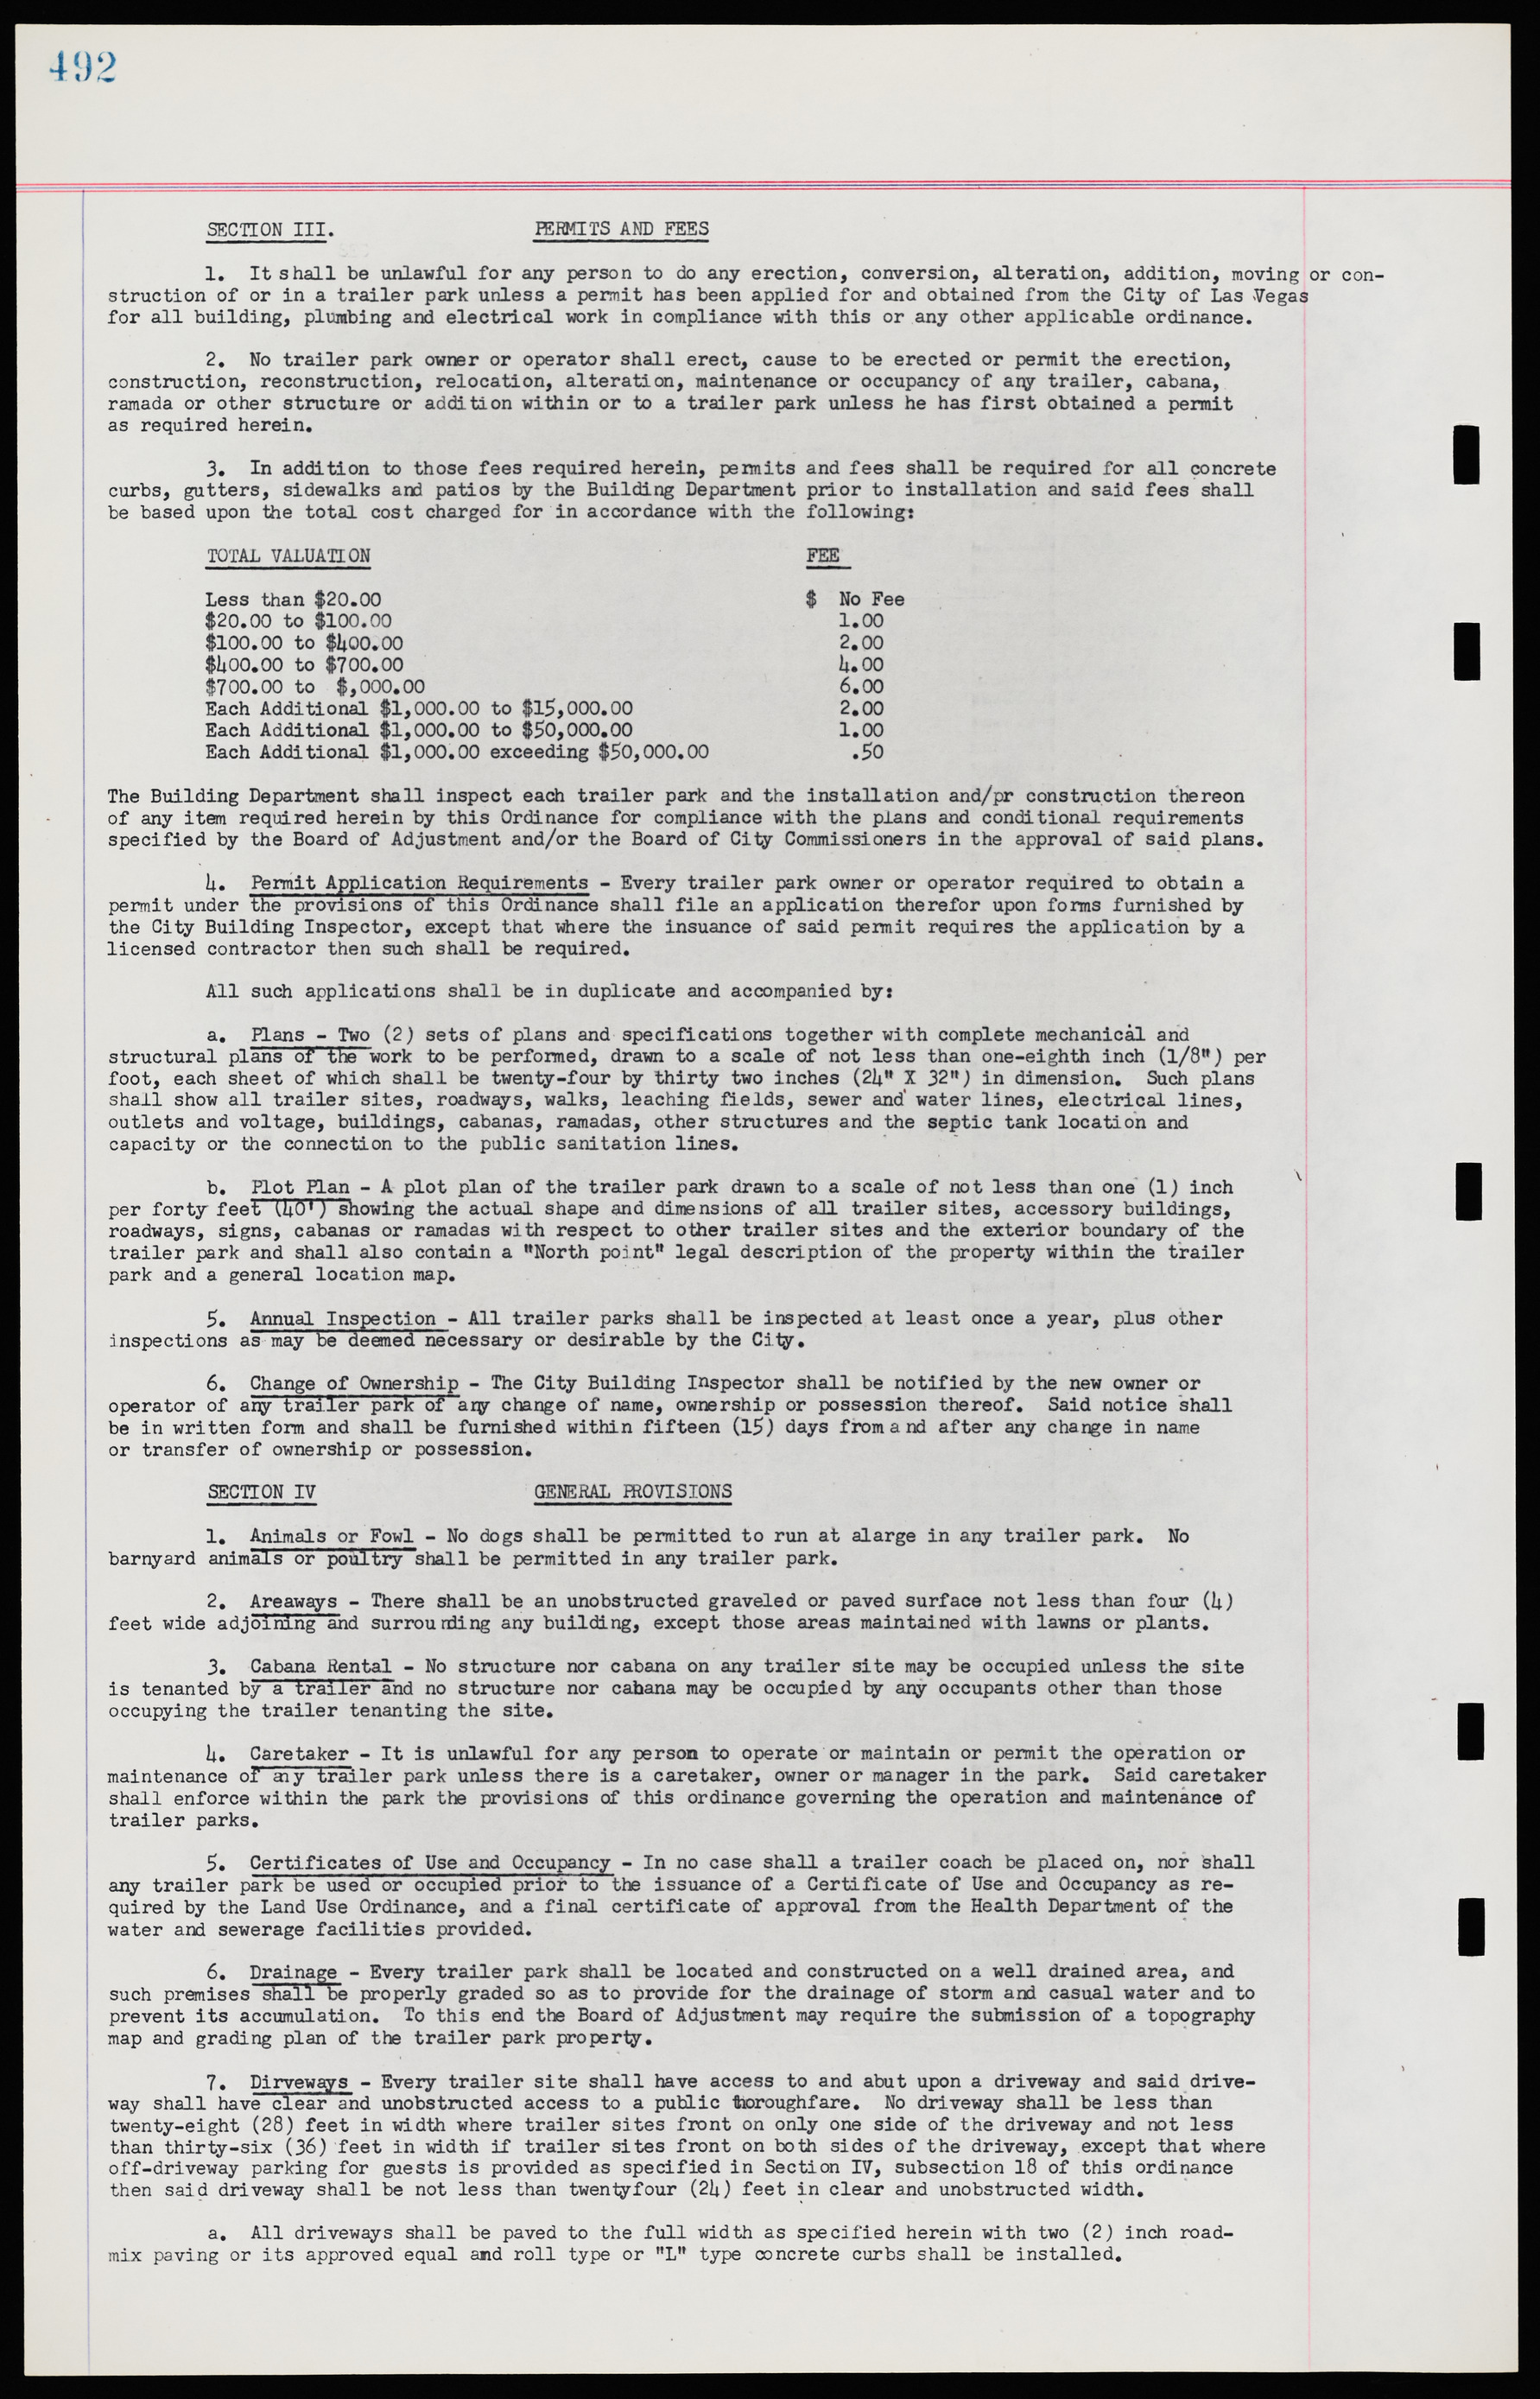 Las Vegas City Ordinances, November 13, 1950 to August 6, 1958, lvc000015-500